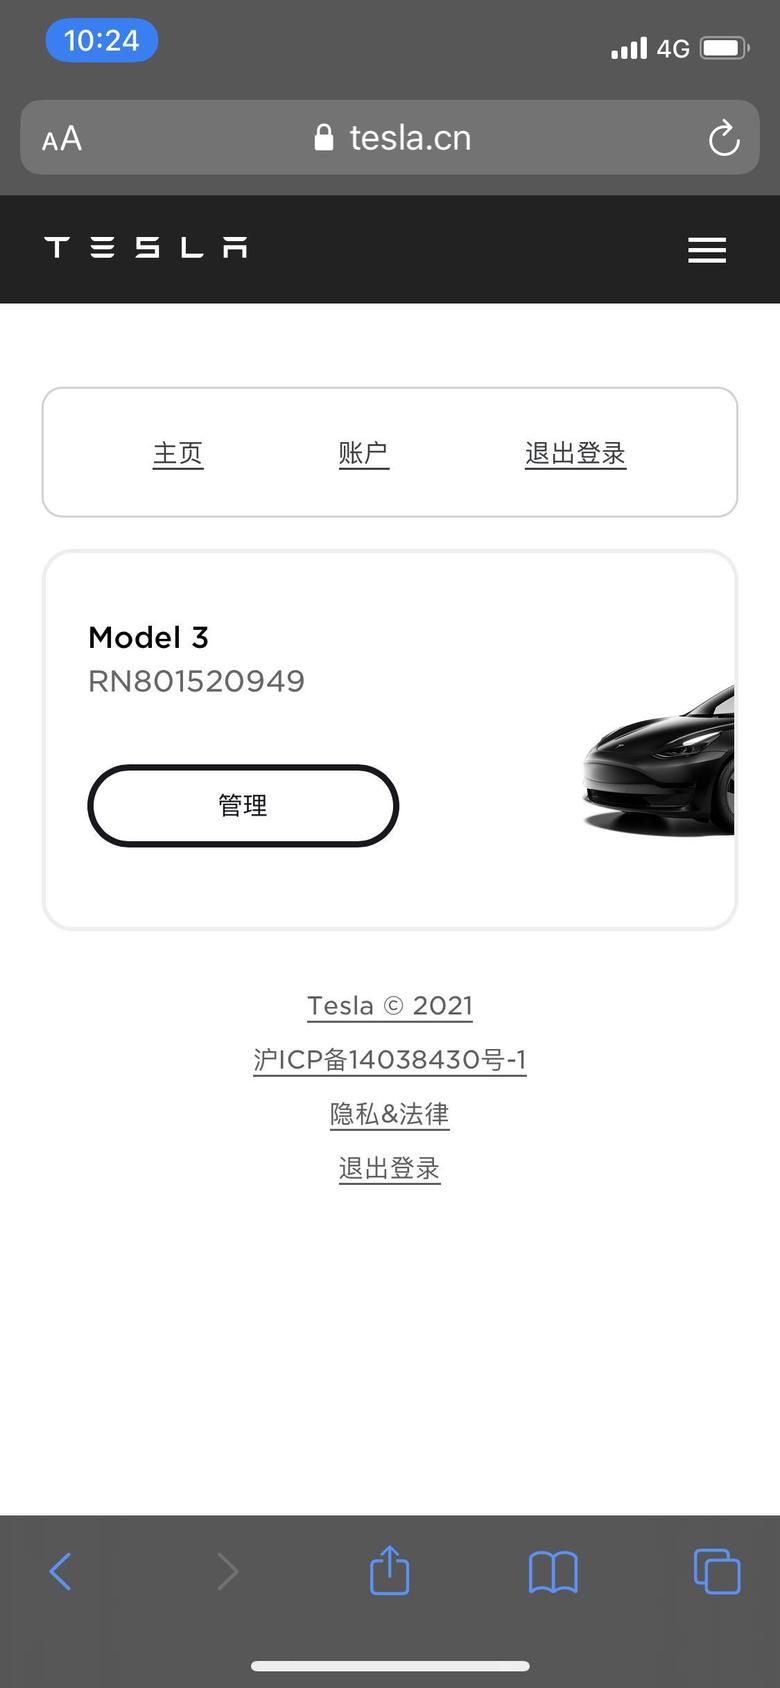 model 3 北京钙中钙，1月10日下定，交付说现在已经匹配到9号，这两天北京有人提到车了吗？